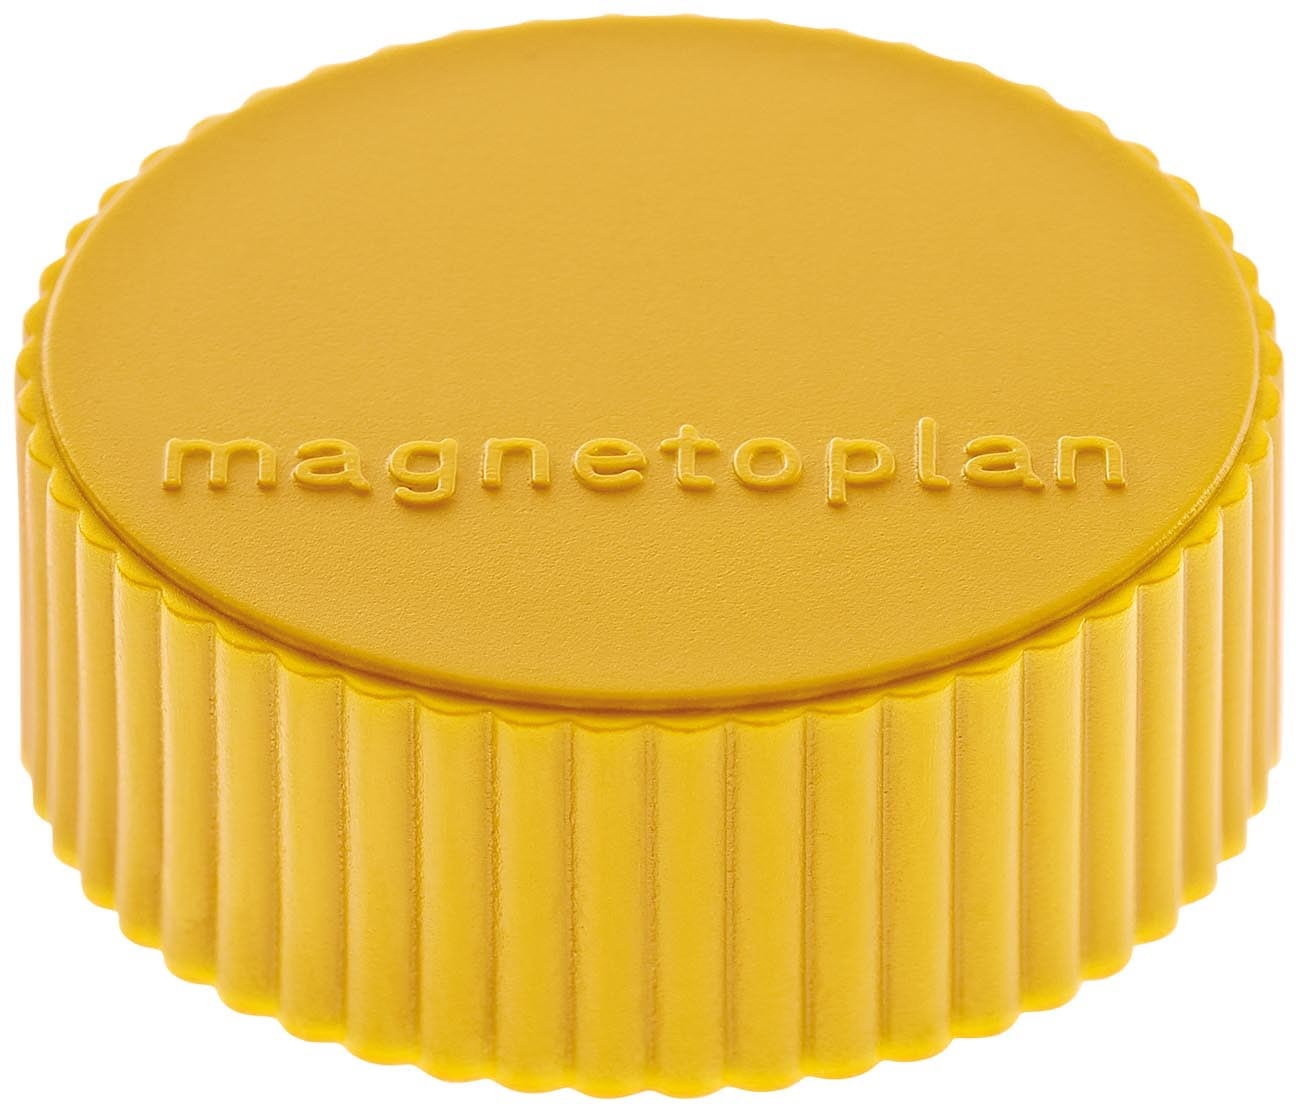 MAGNETOPLAN Aimant Discofix Magnum 34mm 1660002 jaune 10 pcs. jaune 10 pcs.